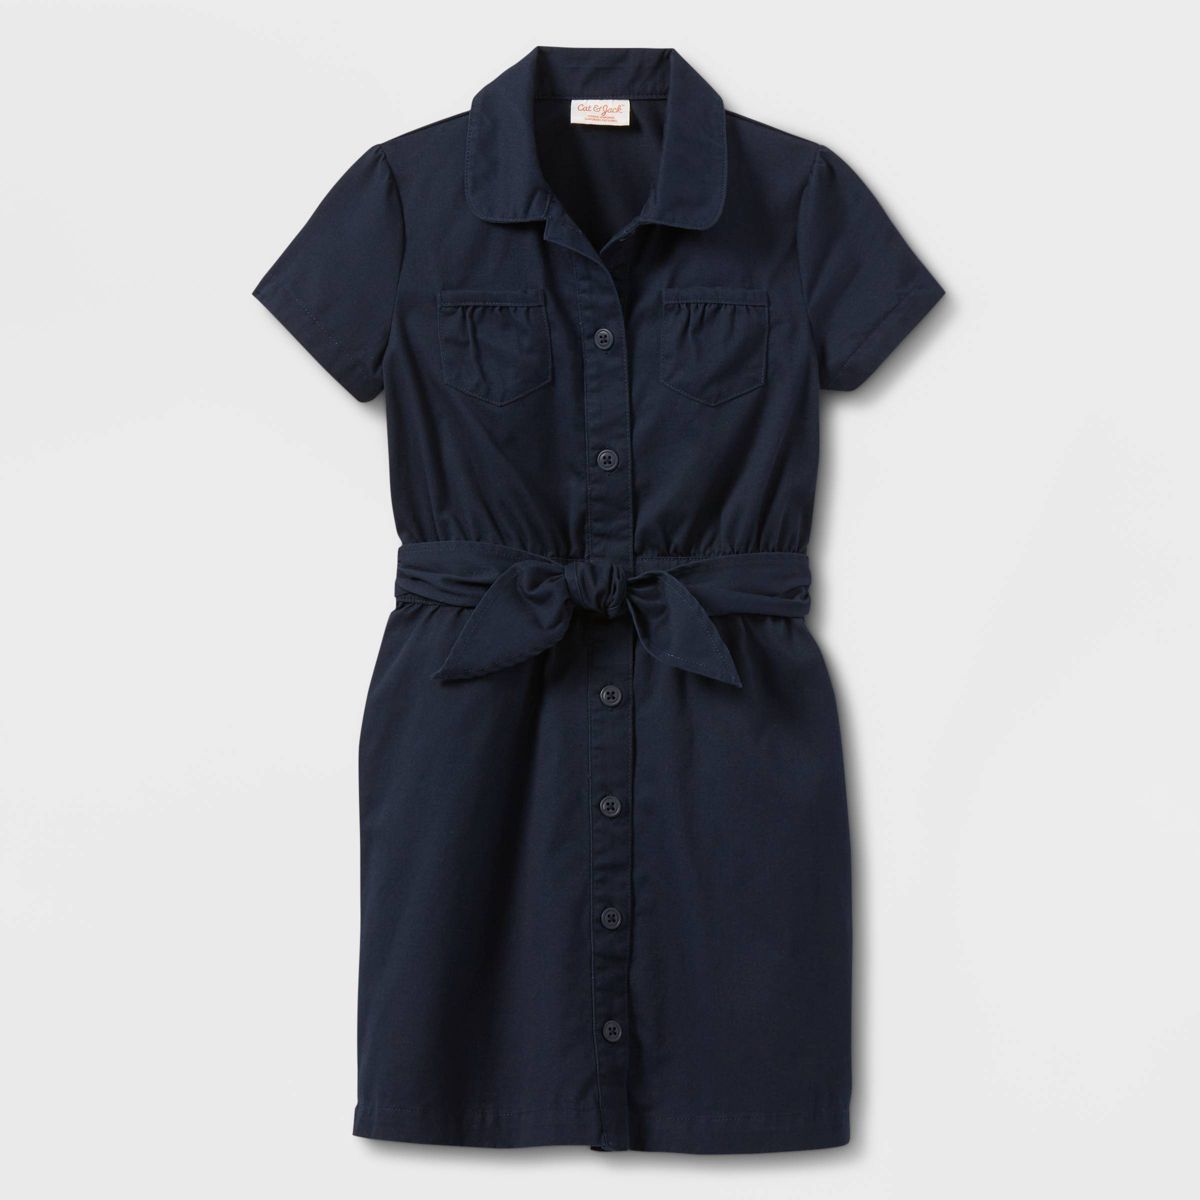 Girls' Short Sleeve Uniform Safari Dress - Cat & Jack™ | Target